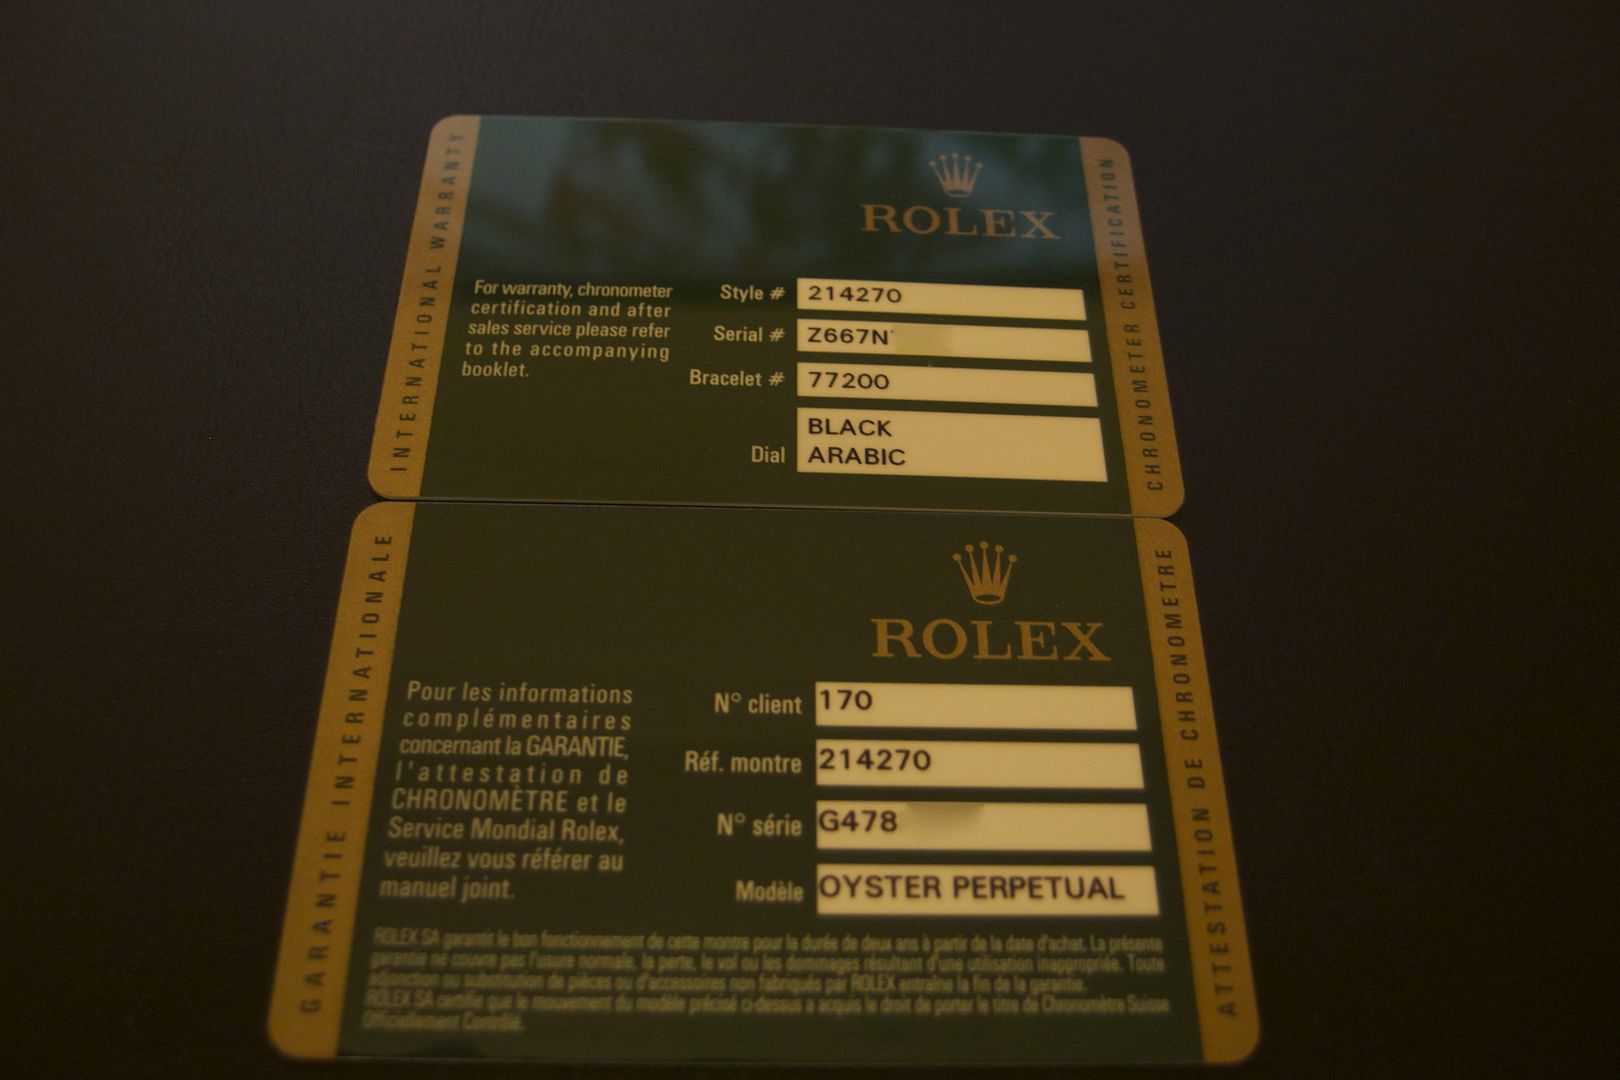  USA Style Rolex Warranty Card vs. Overseas Foreign Style Rolex Warranty Card Differences Explained